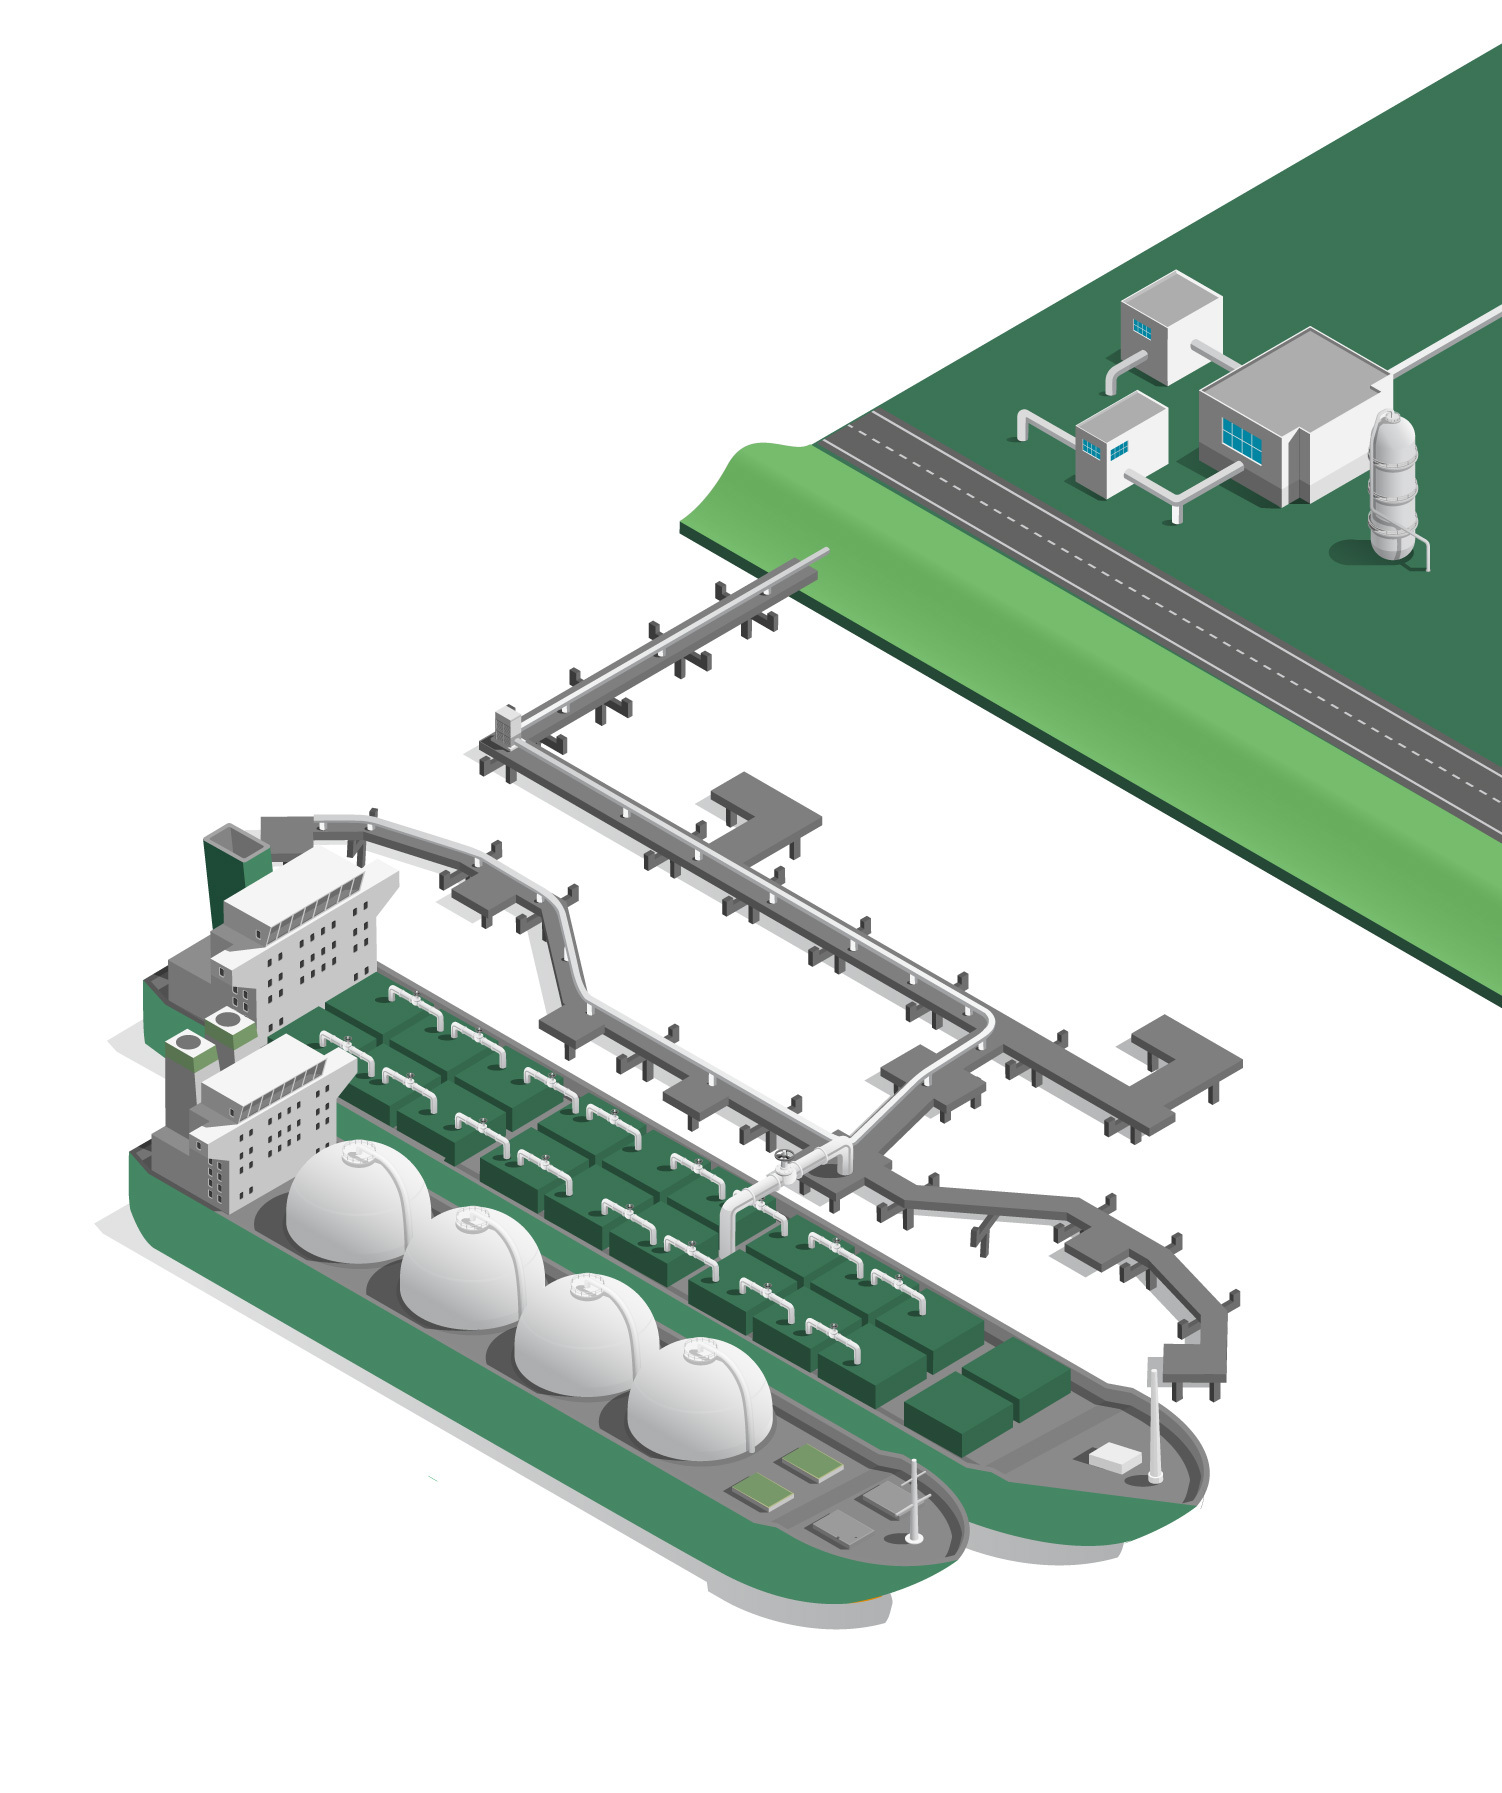 Illustration of the Wilhelmshaven LNG terminal